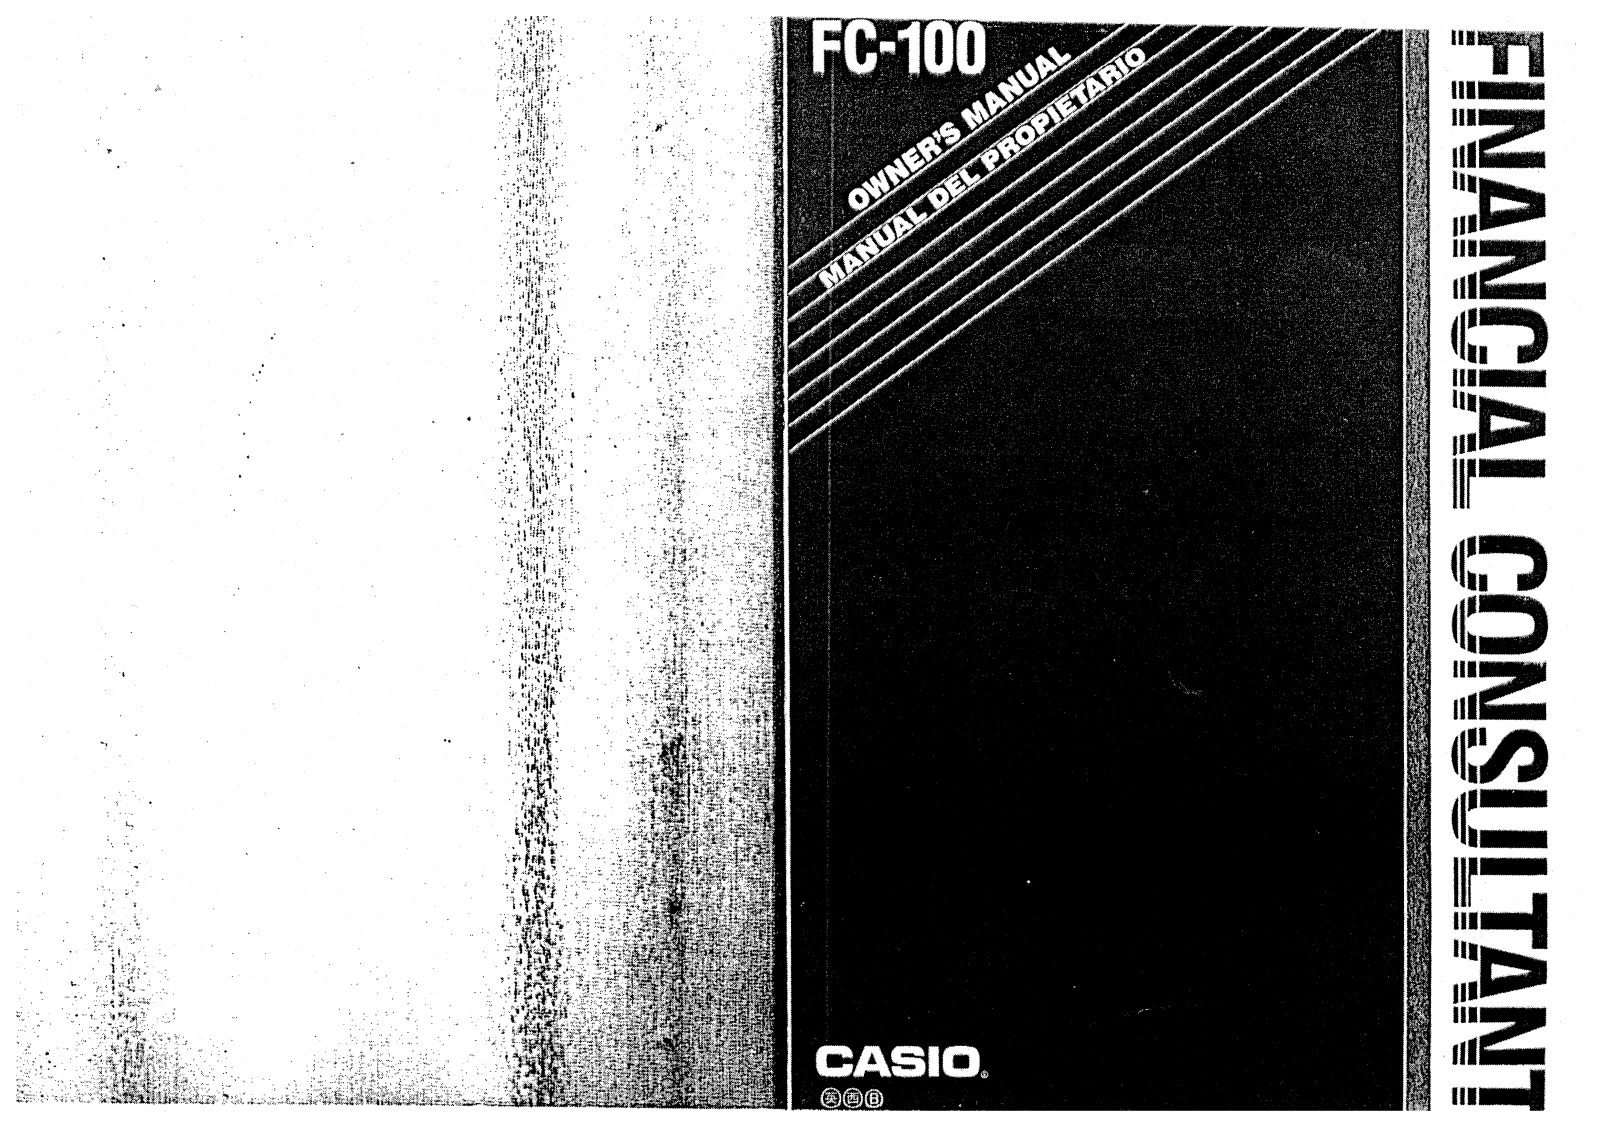 CASIO FC-100 User Guide